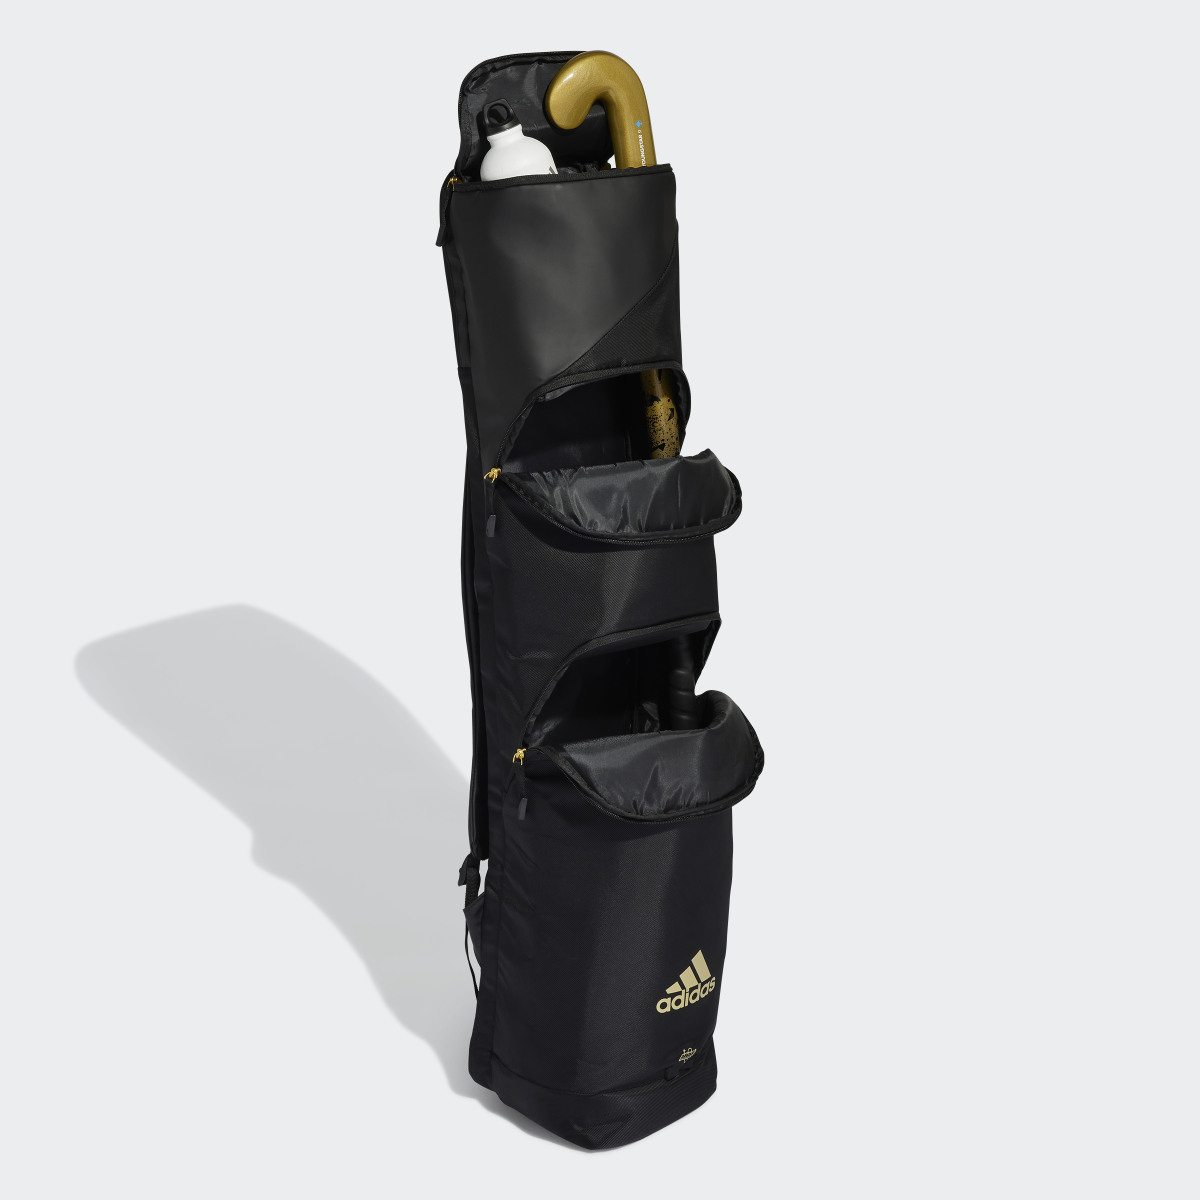 Adidas VS.6 Black/Gold Hockey Stick Bag. 5